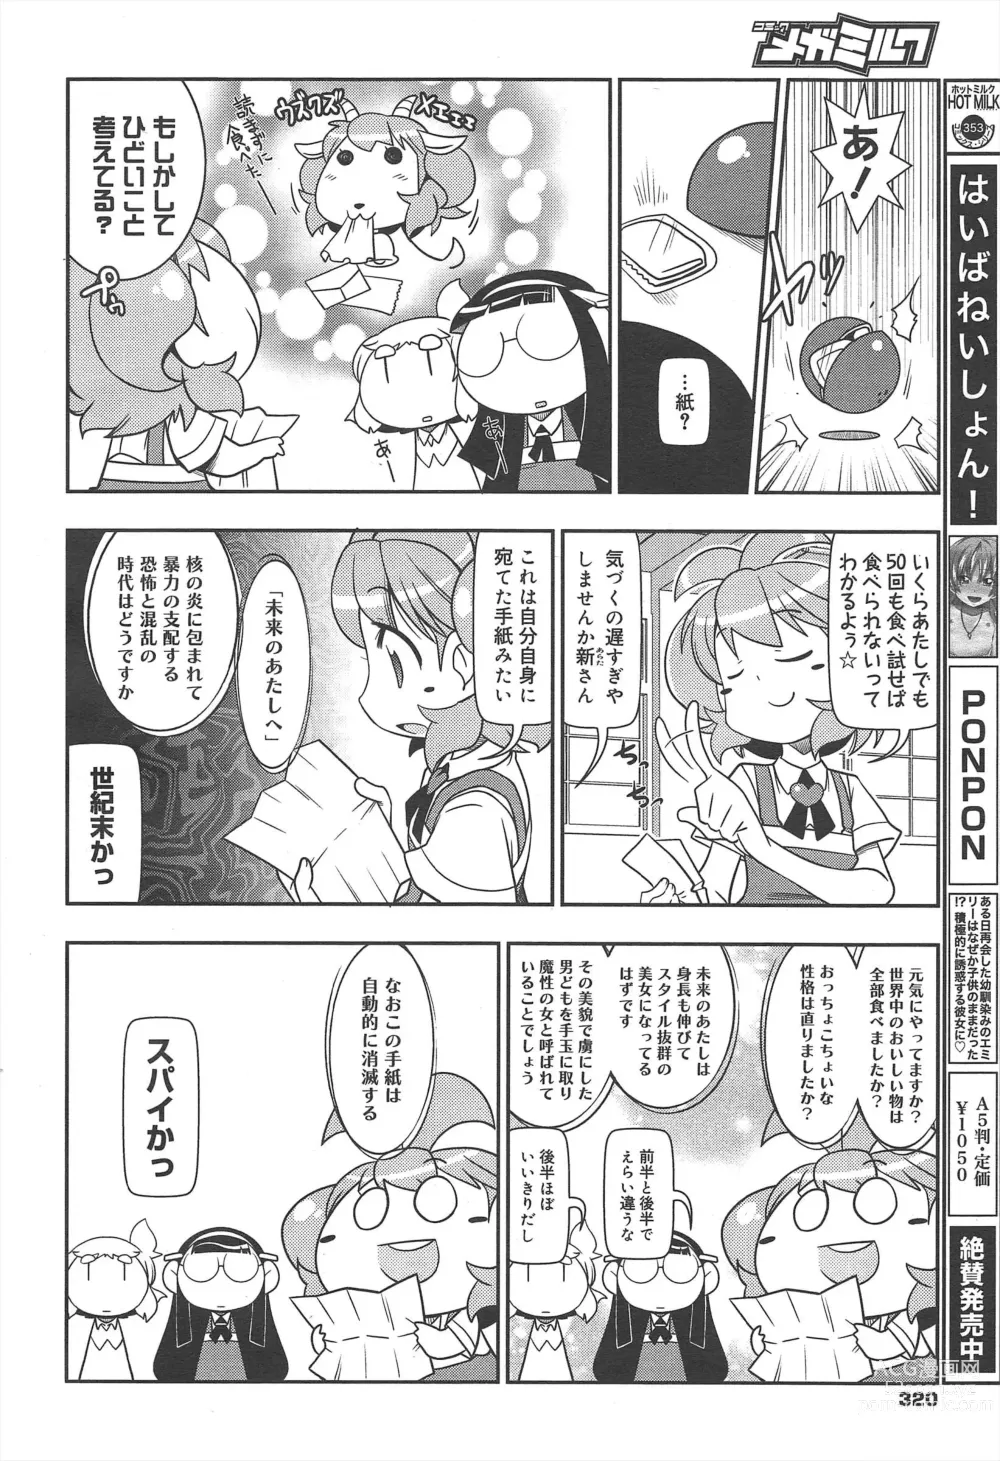 Page 320 of manga COMIC Megamilk 2012-07 Vol.25